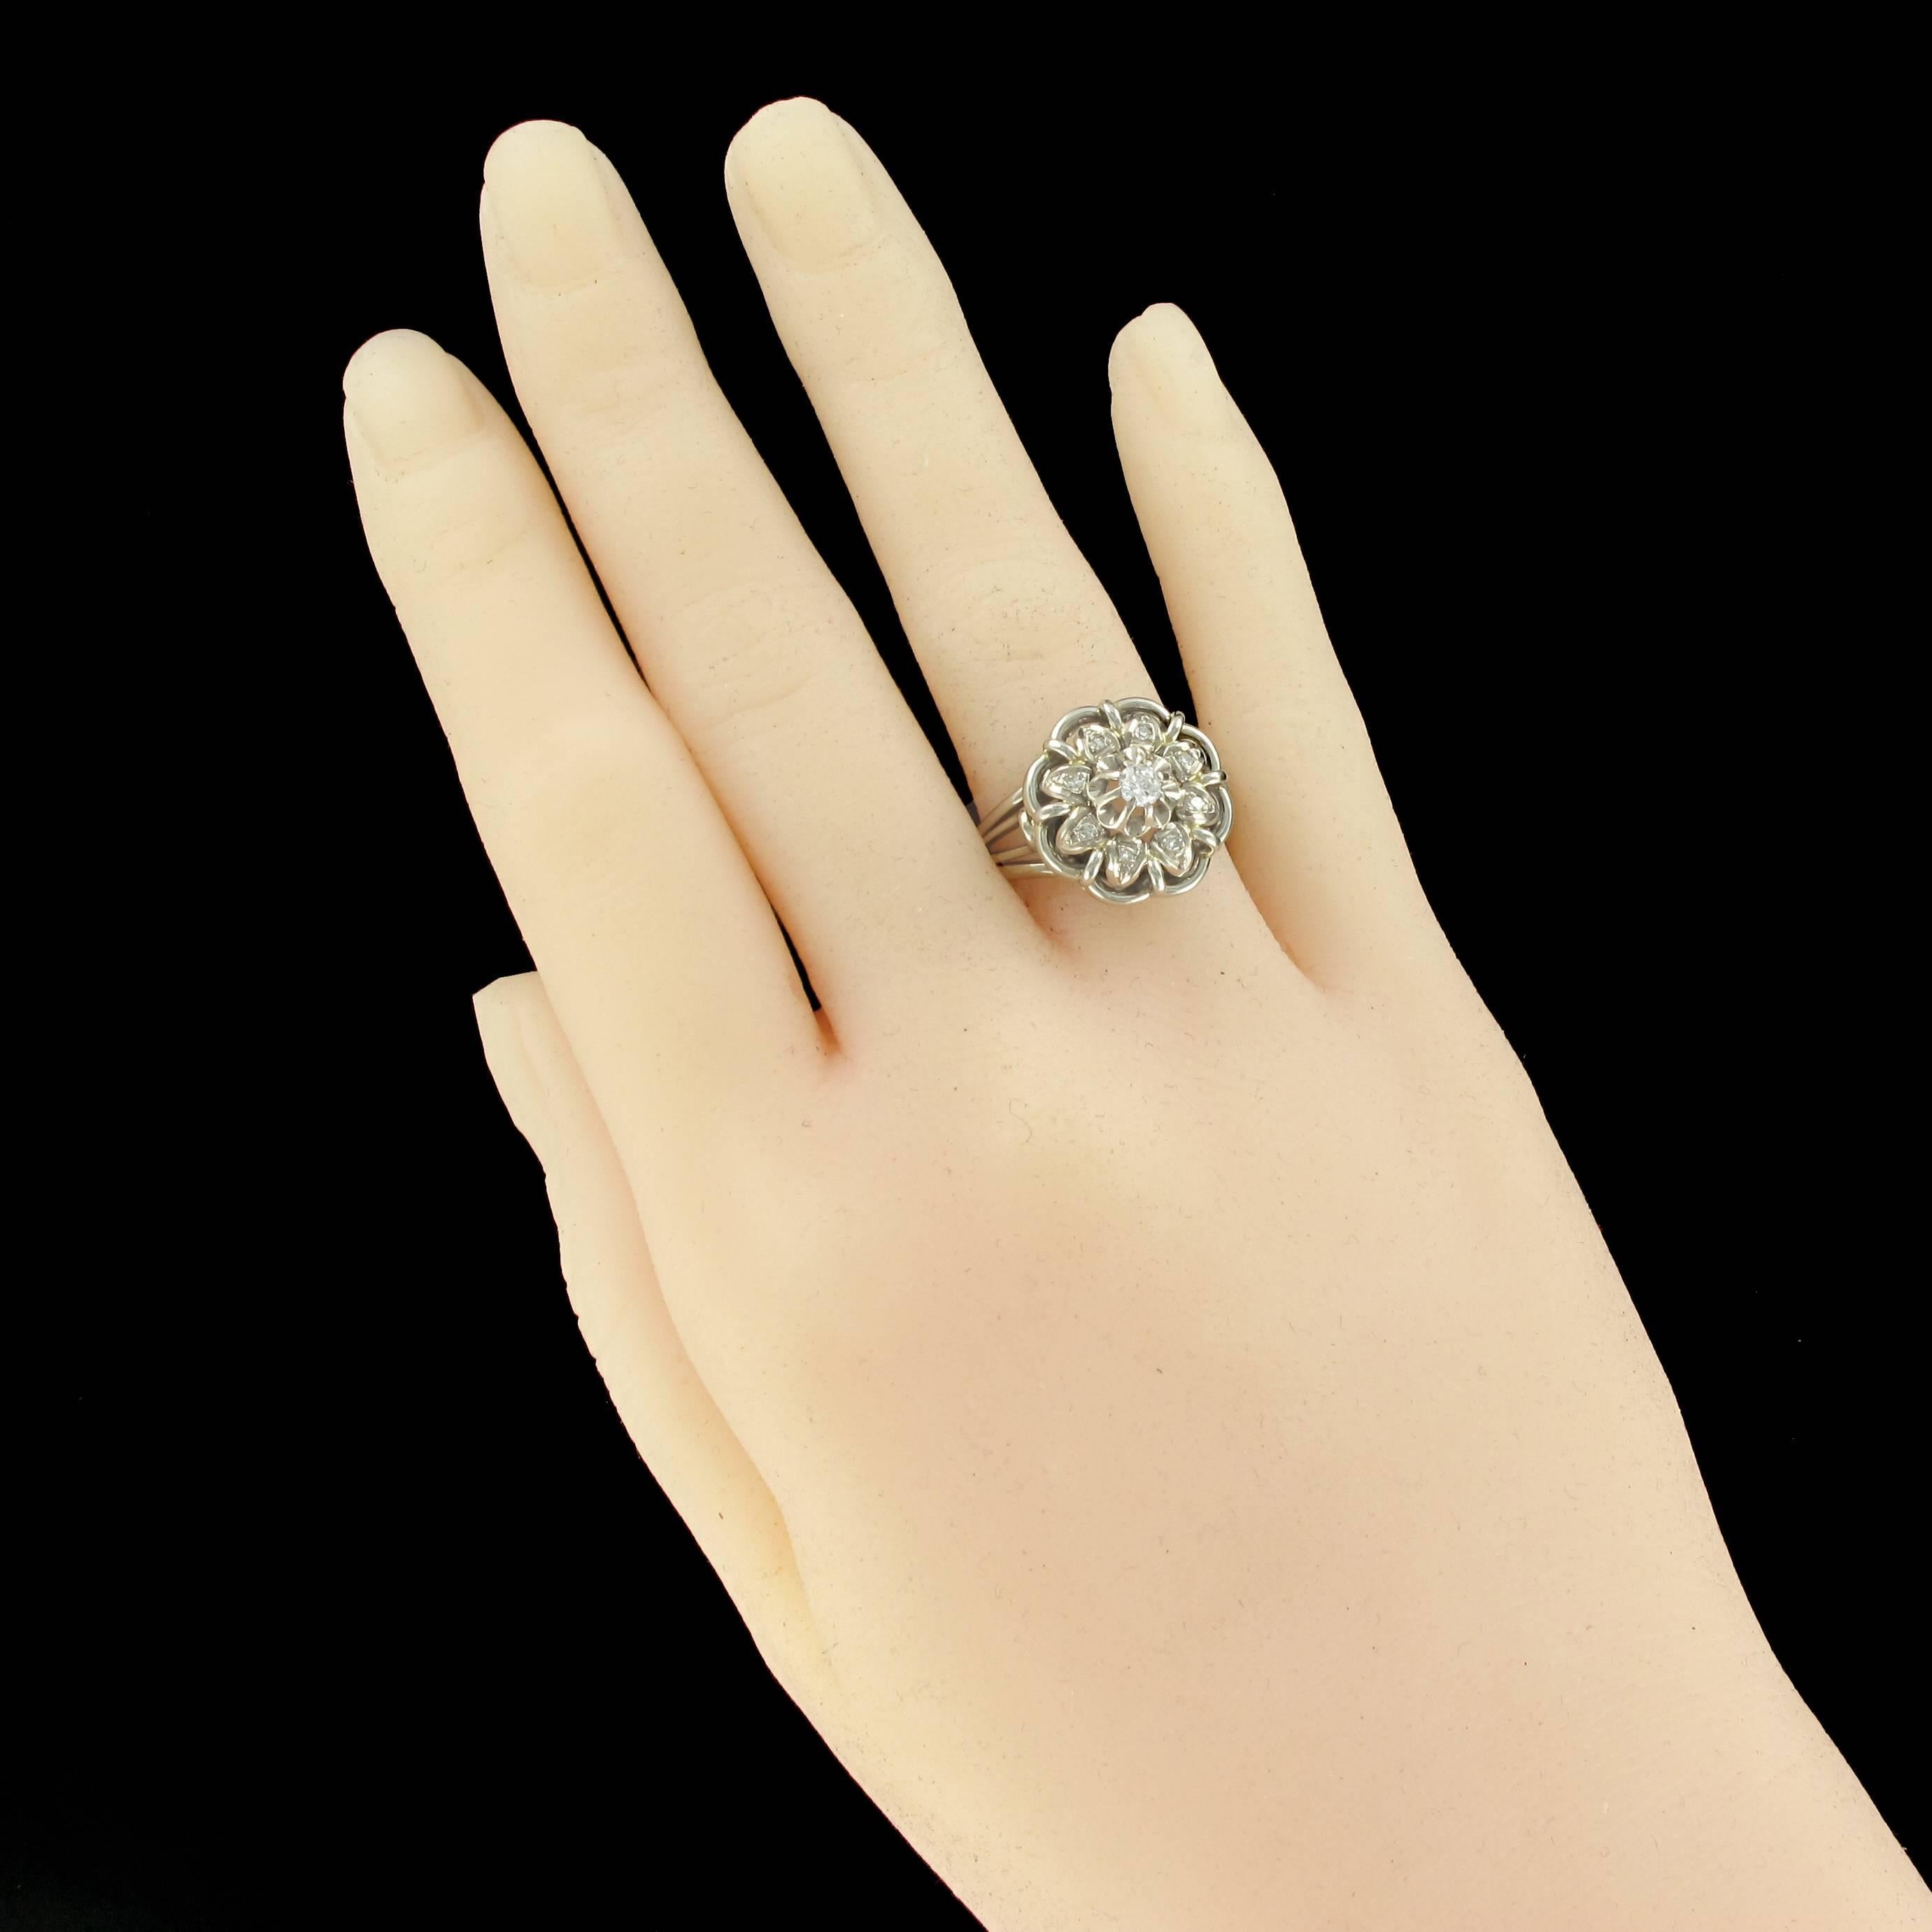 Retro 1960s French Diamond Gold Ring